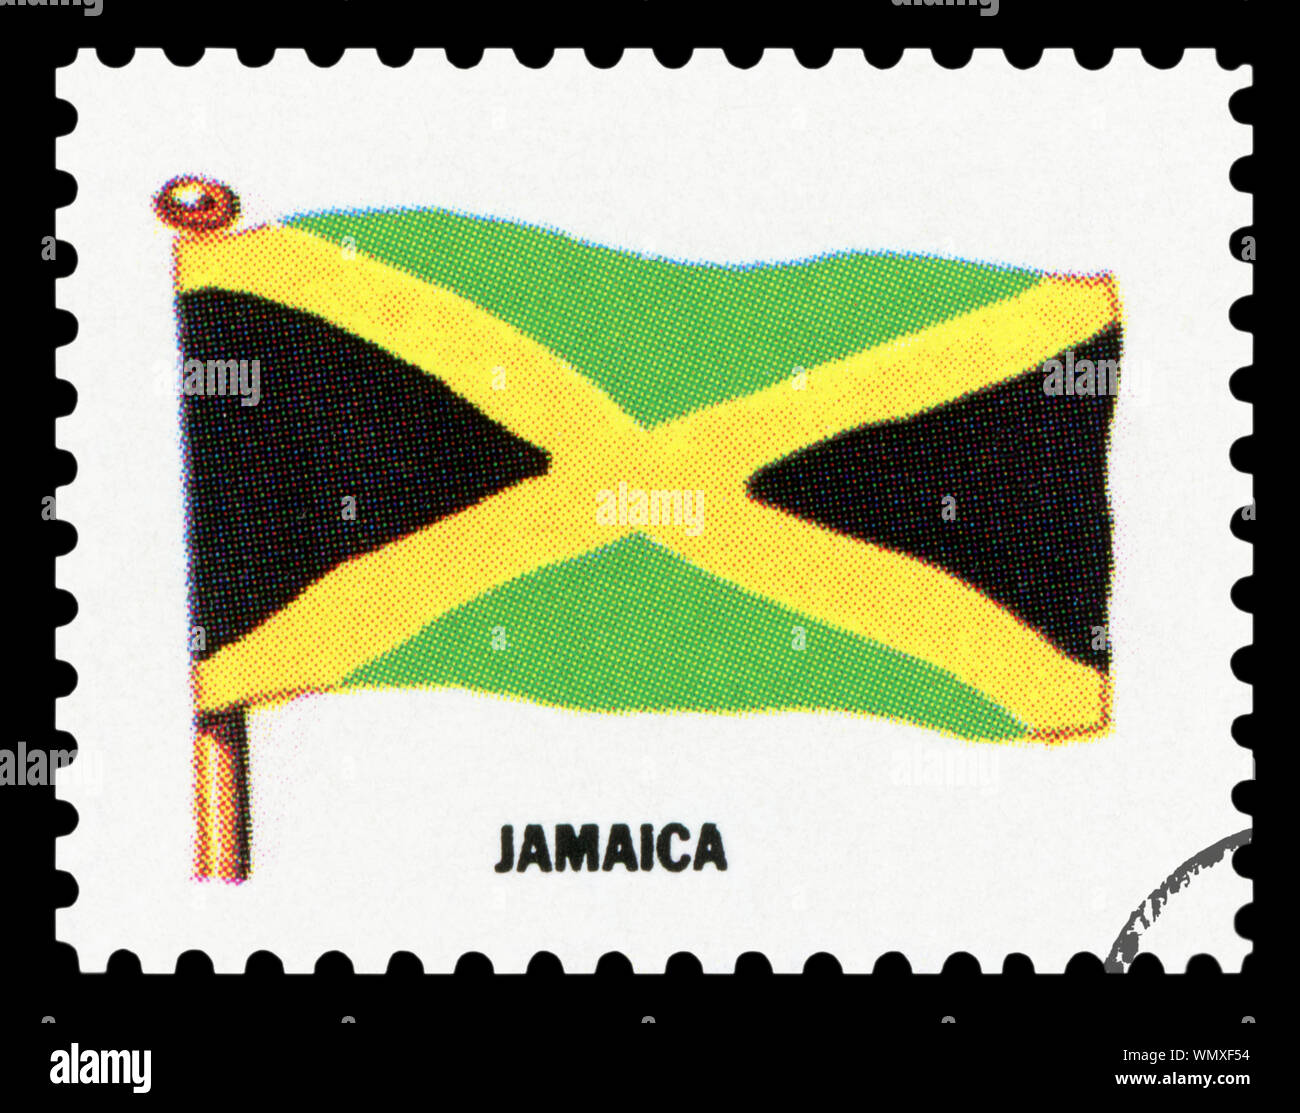 JAMAICA FLAG - Postage Stamp isolated on black background. Stock Photo